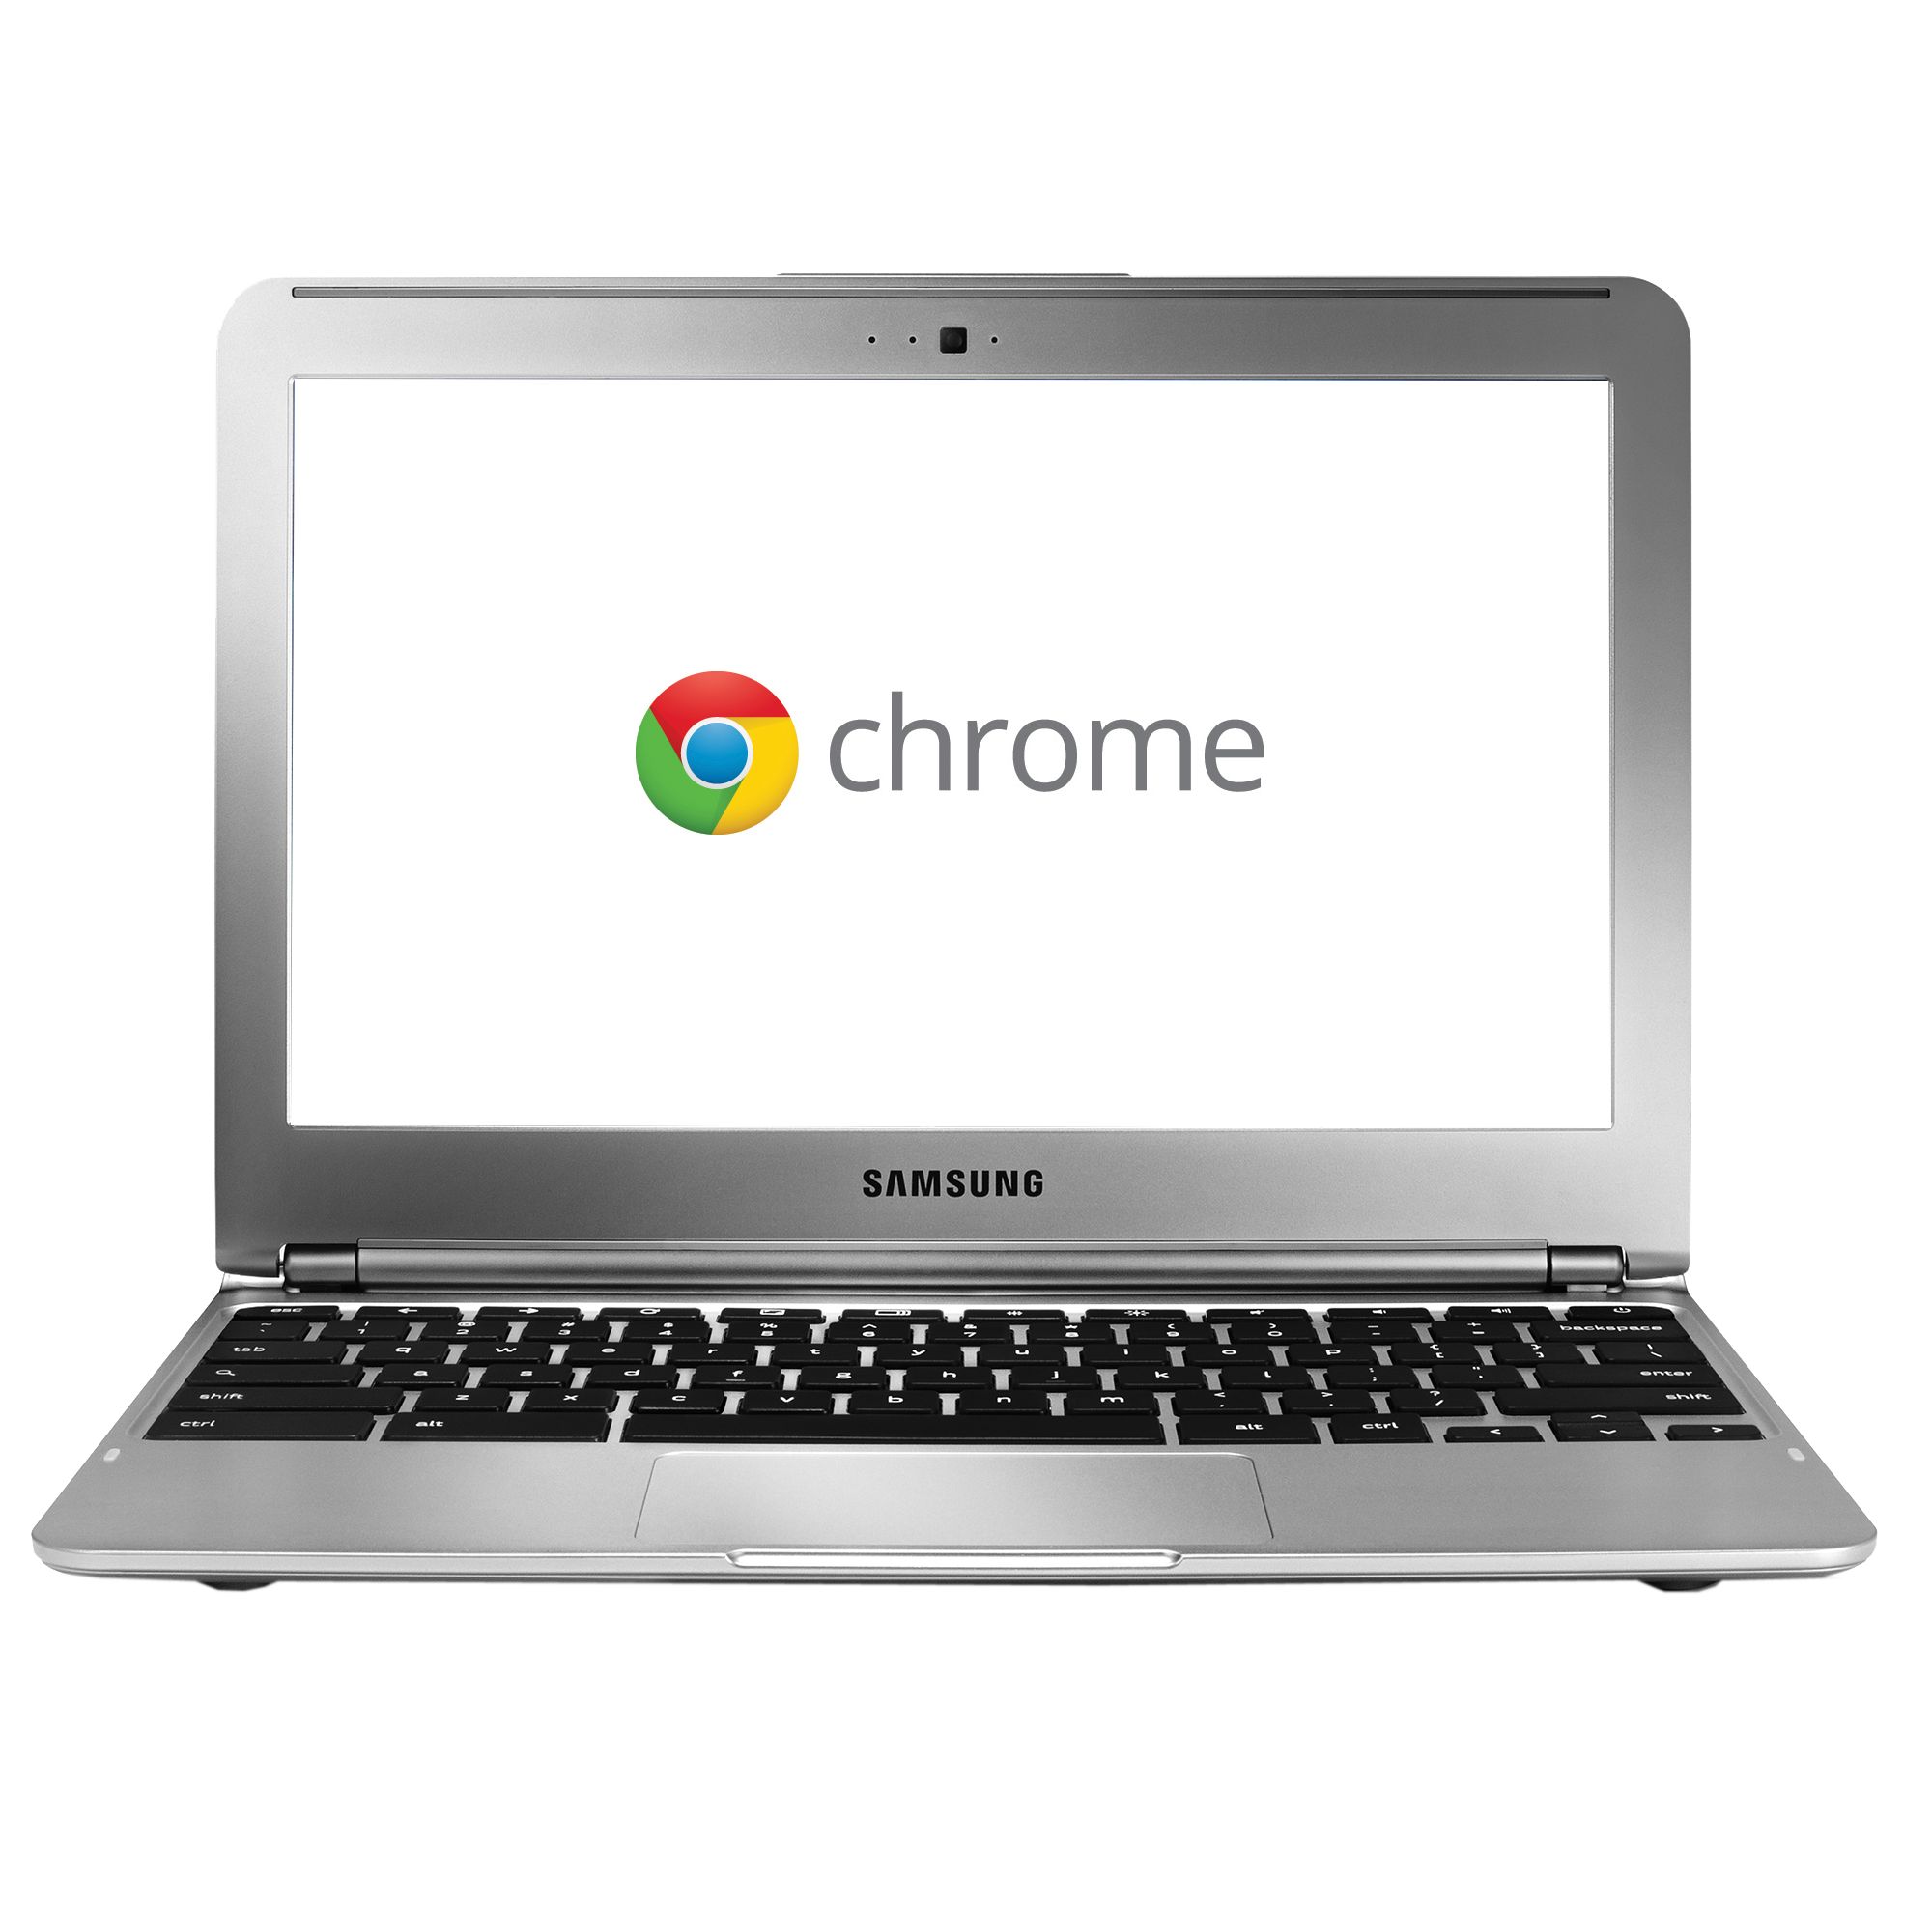 Samsung Chromebook on Chromebook Wifi  Xe303c12 A01  Exynos 5250  1 7ghz  Wi Fi  11 6 Inch